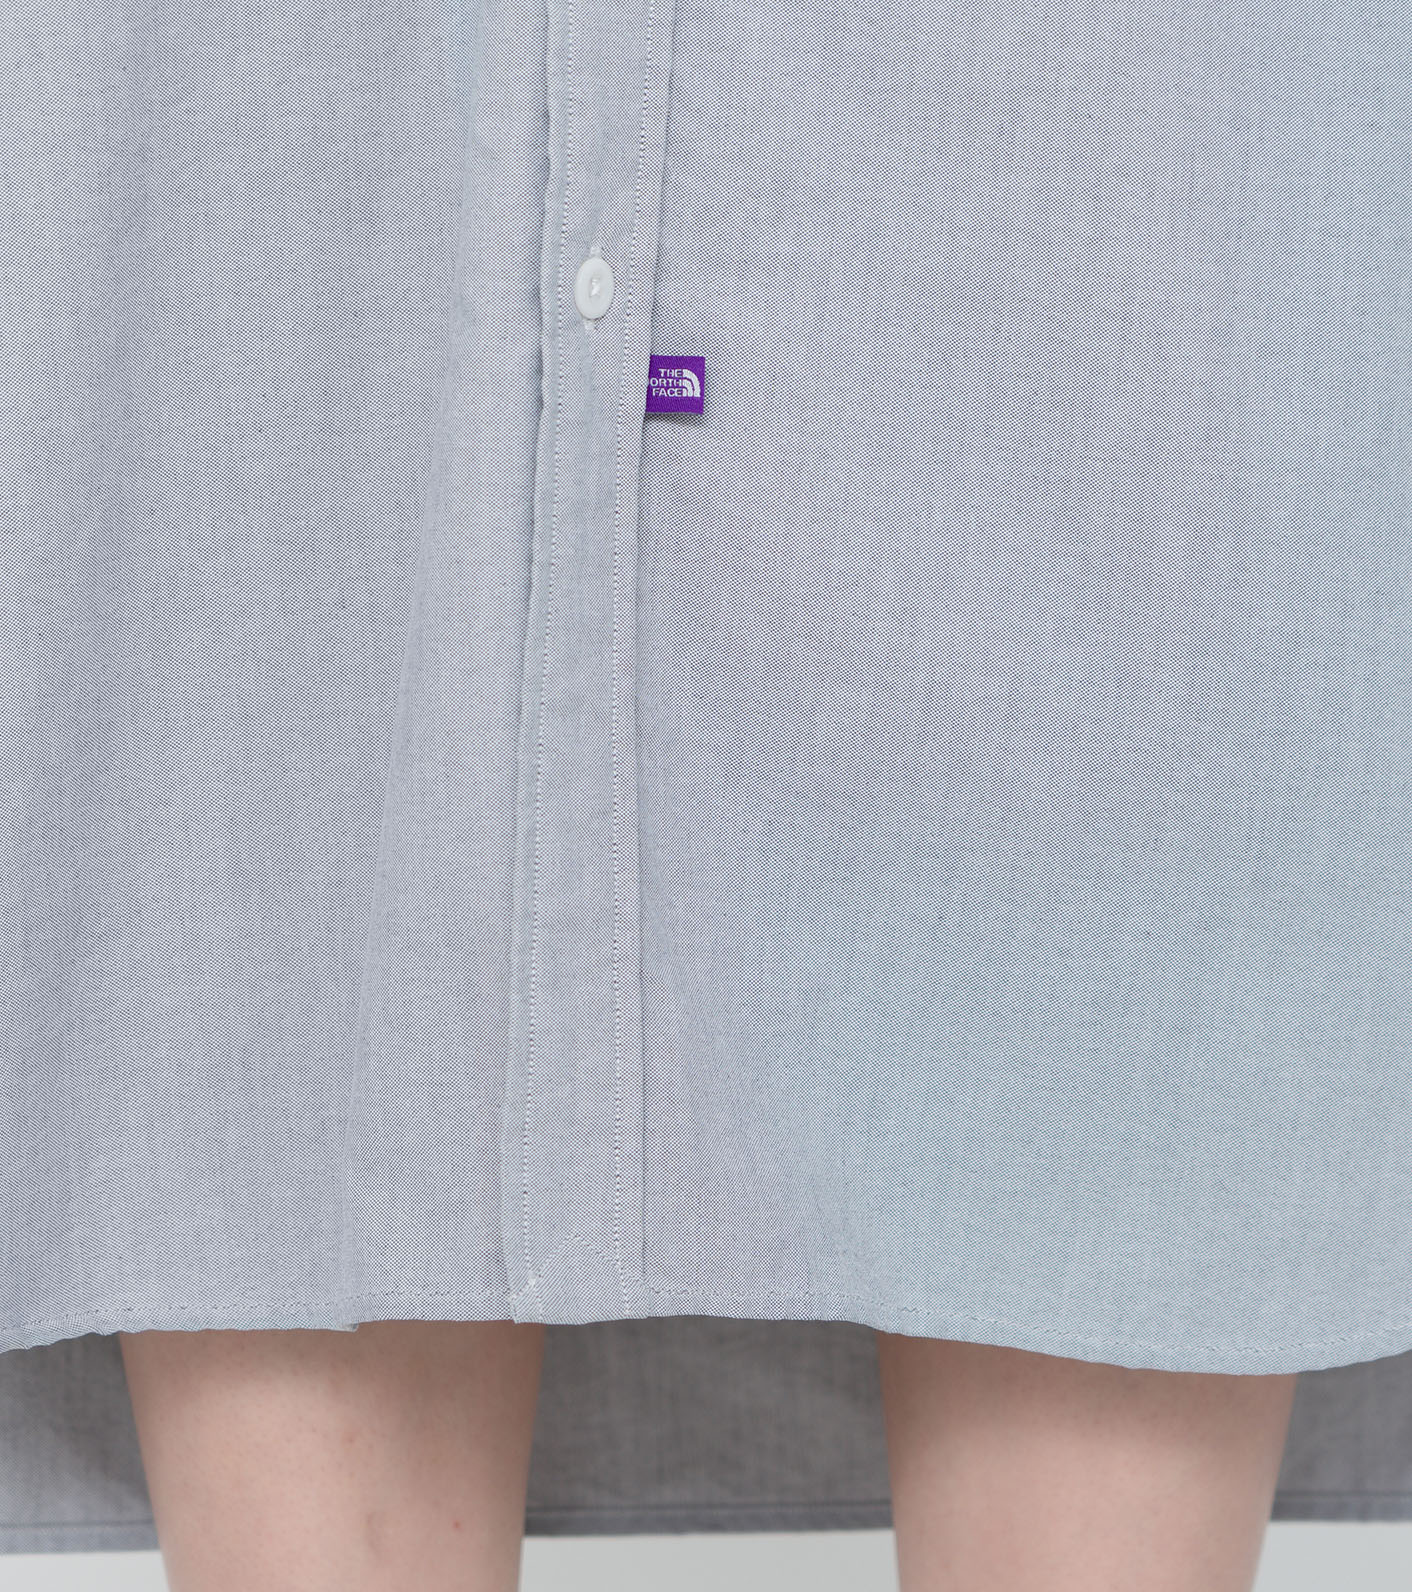 nanamica / Button Down Field Shirt Dress